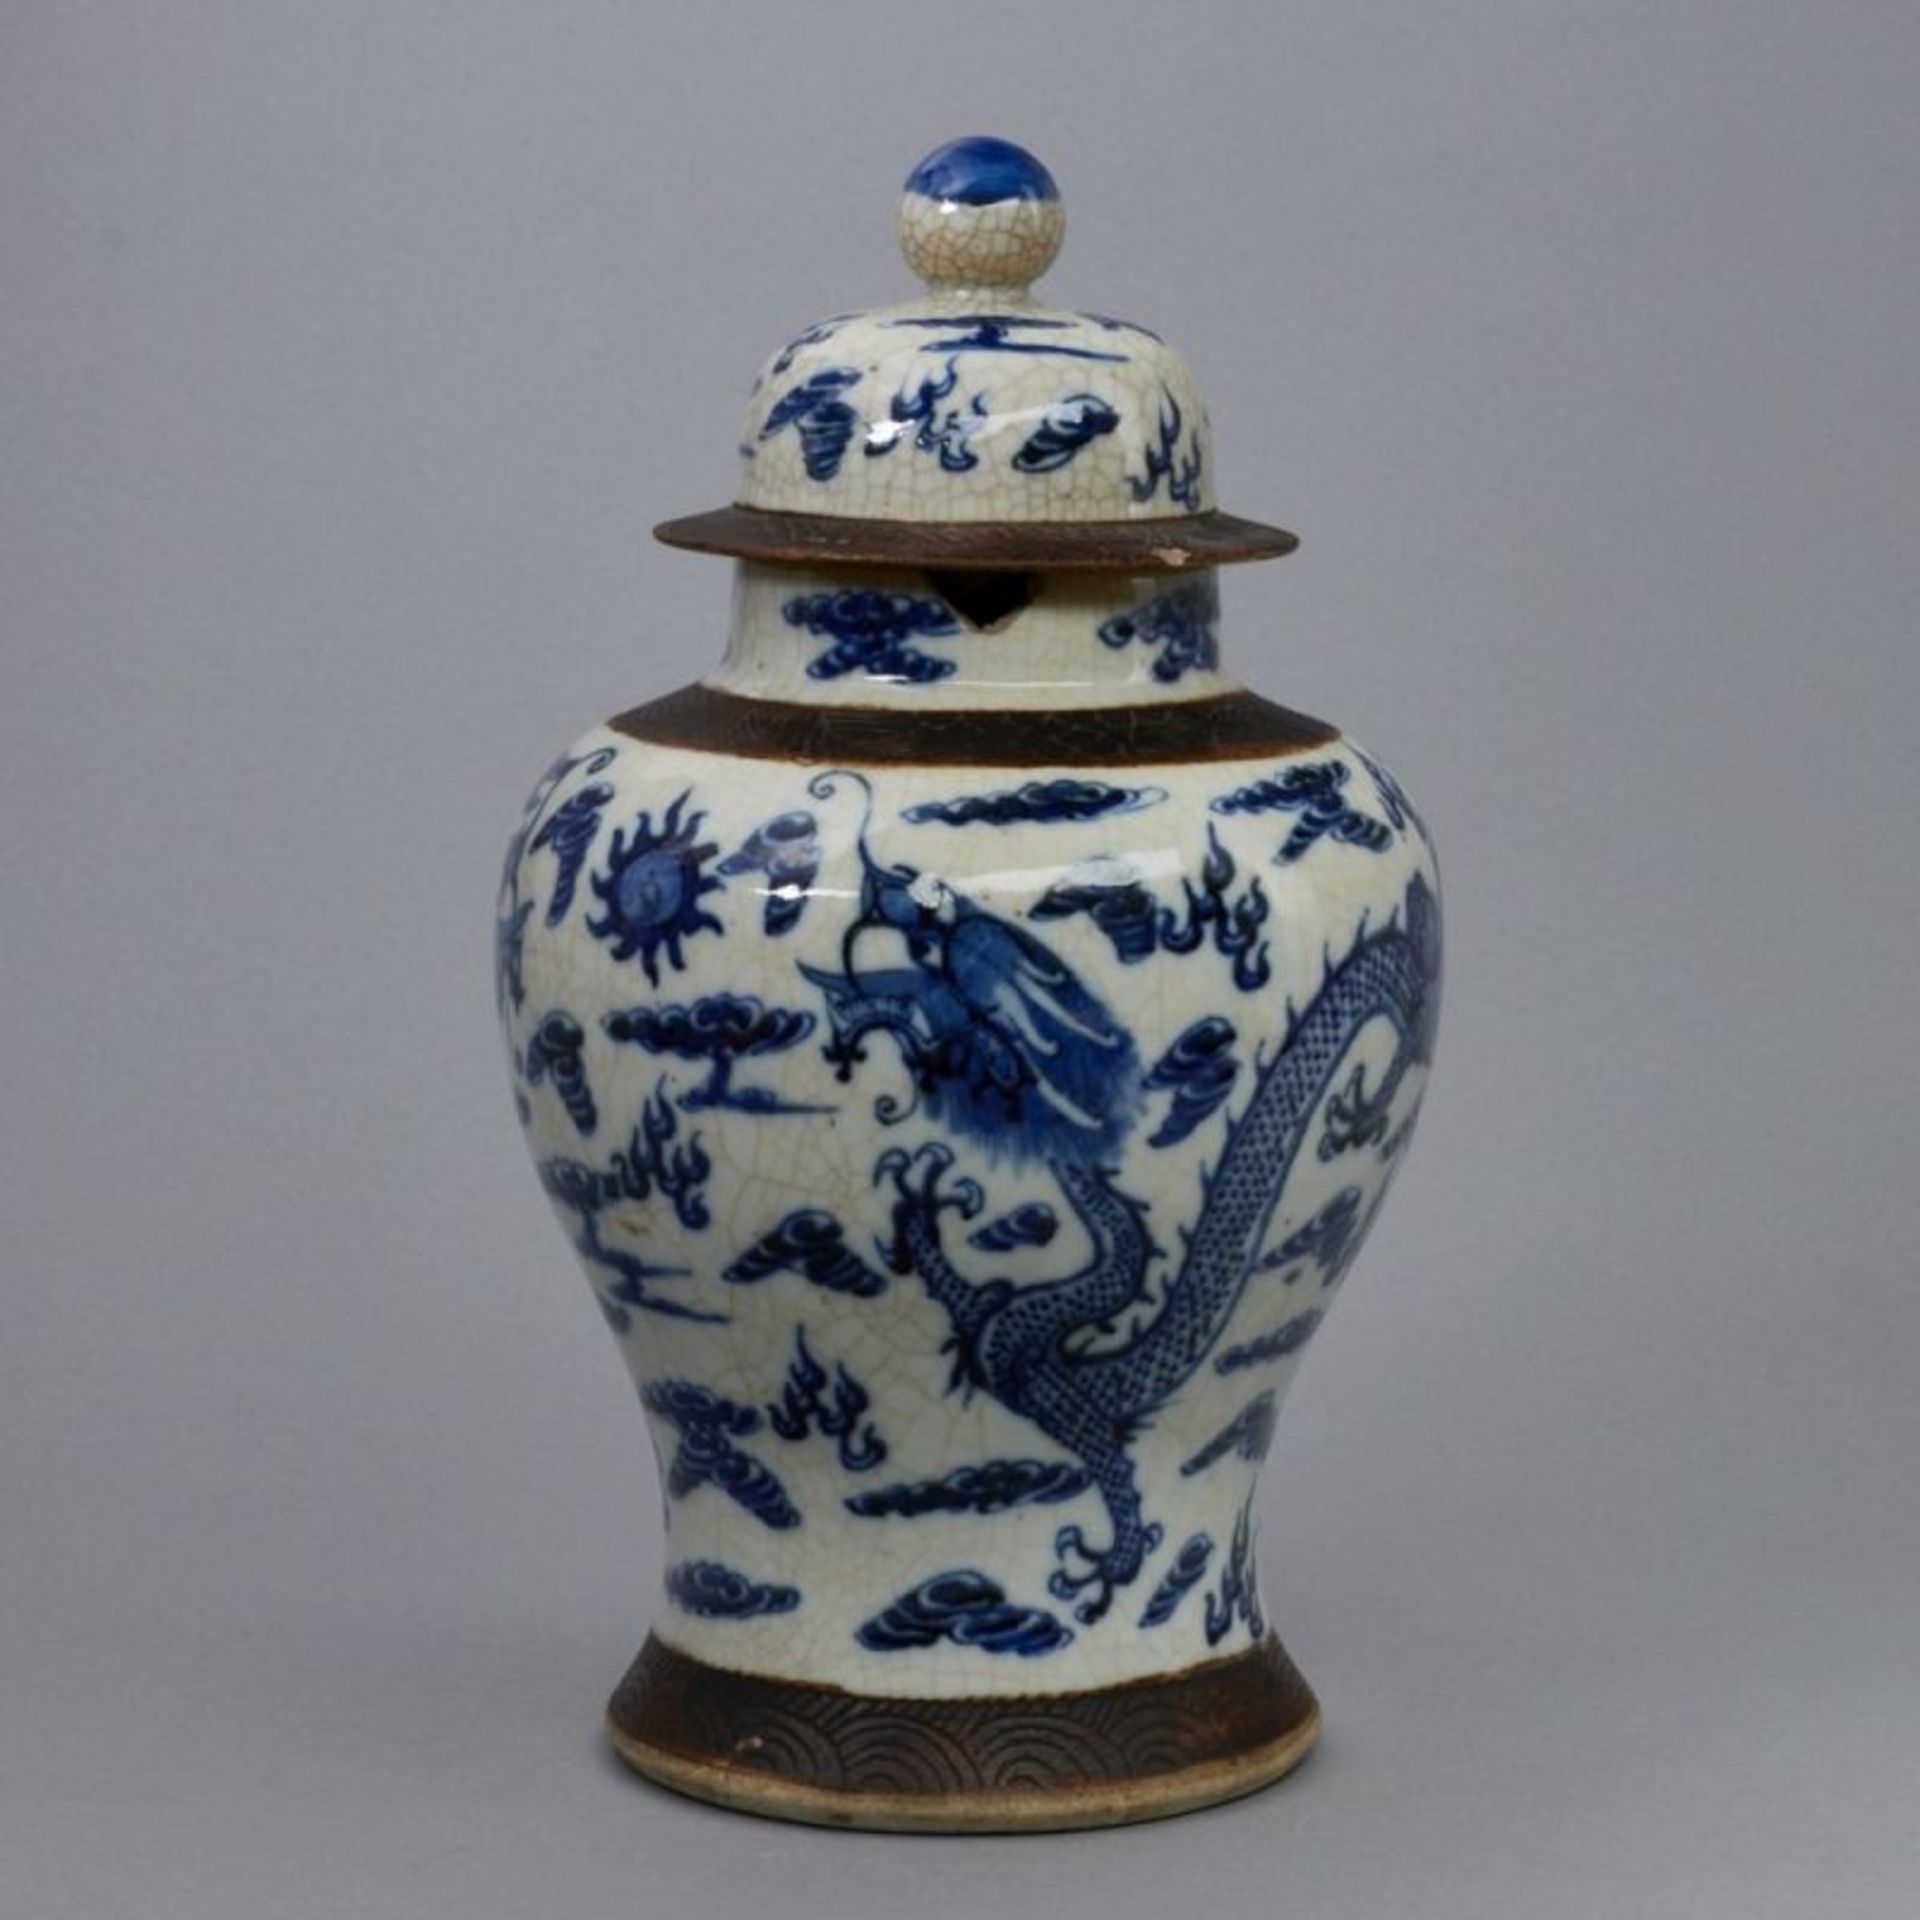 Deckelvase, China, Qing Dynastie, um 1800 - Image 4 of 4